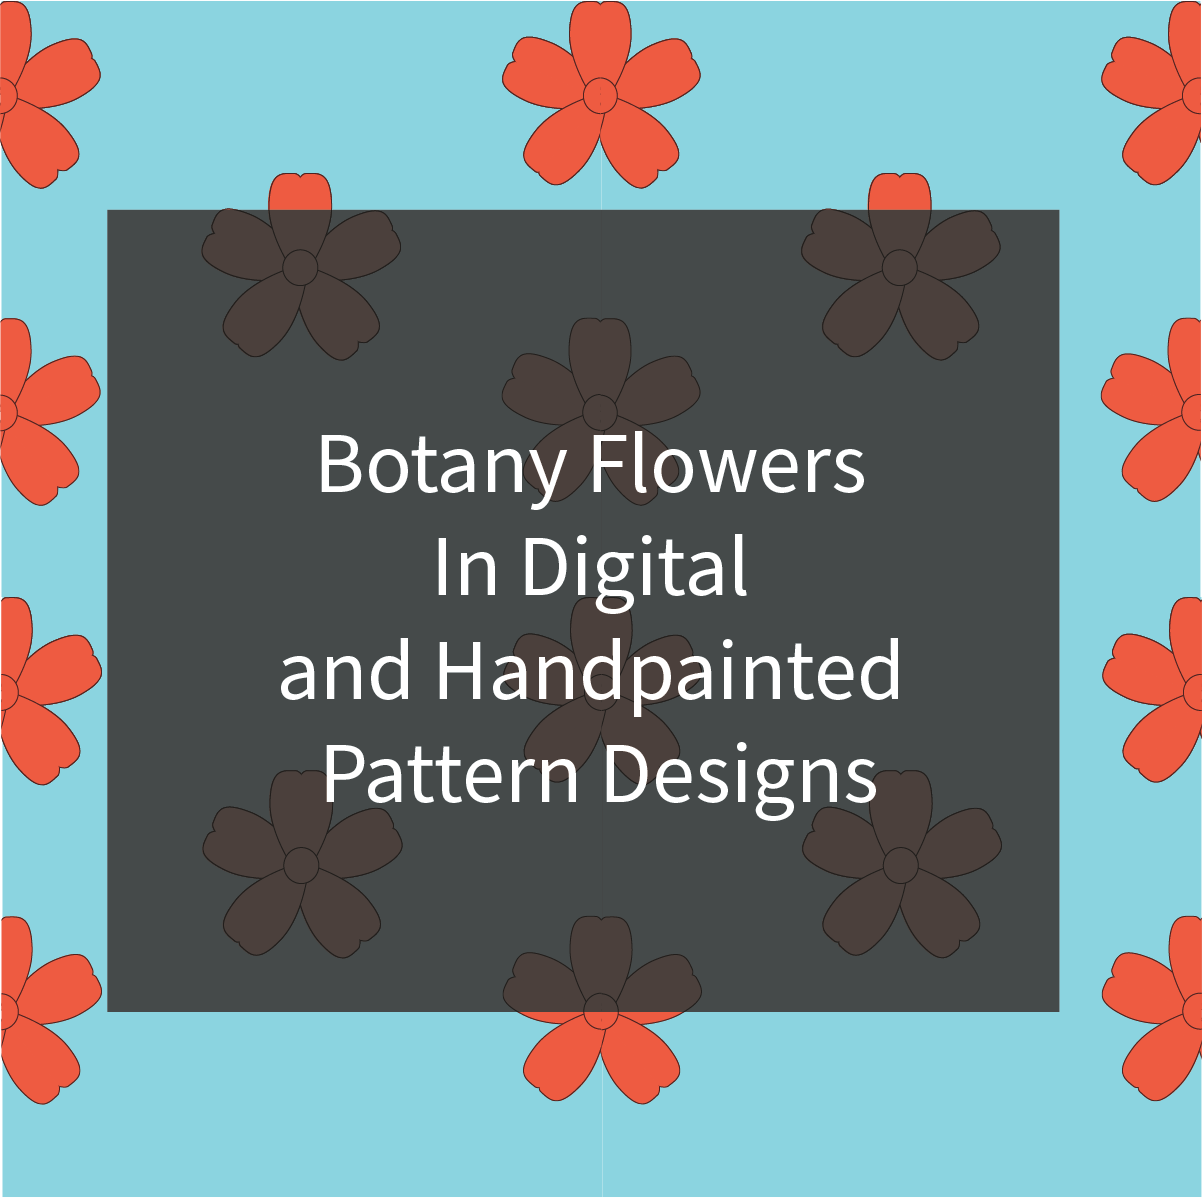 Botany flowers